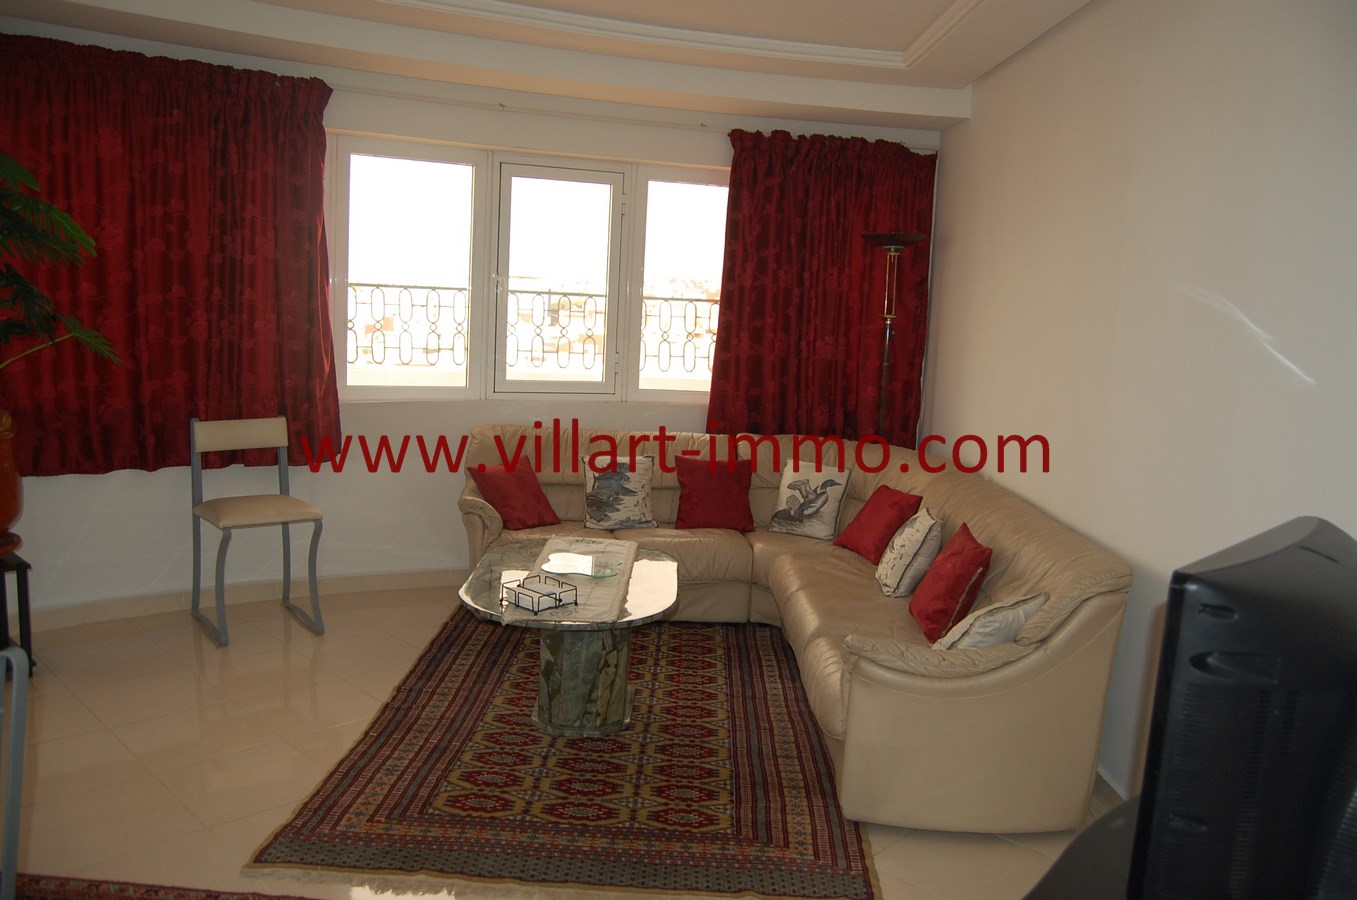 2-Vente-Appartement-Tanger-Route de Rabat-Salon 1-VA494-Villart Immo